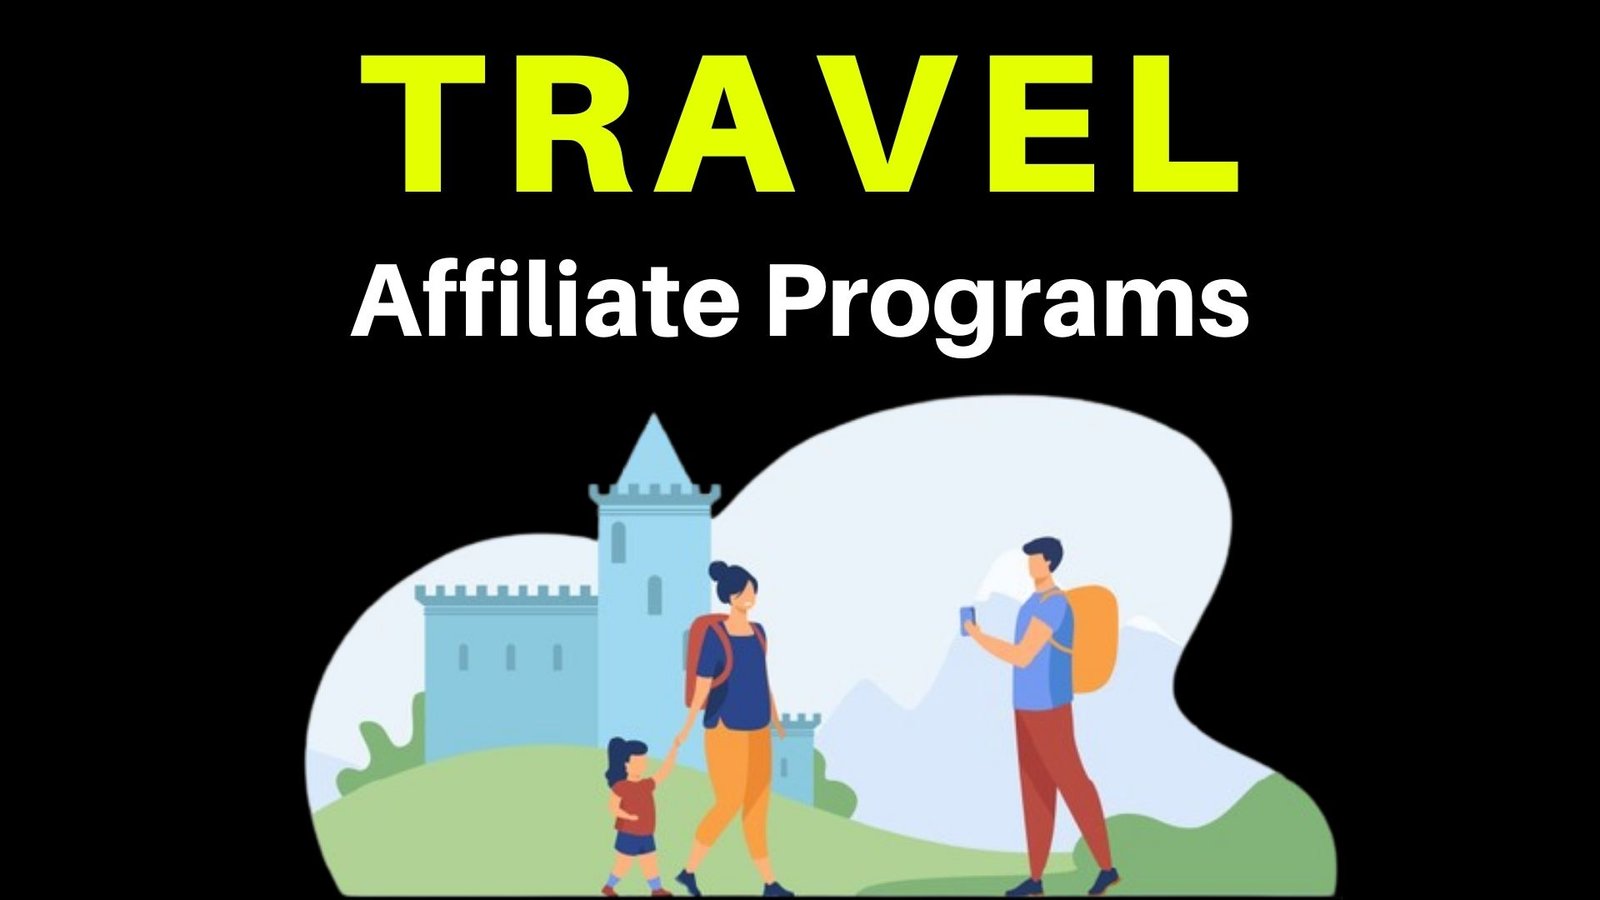 best travel affiliate programs